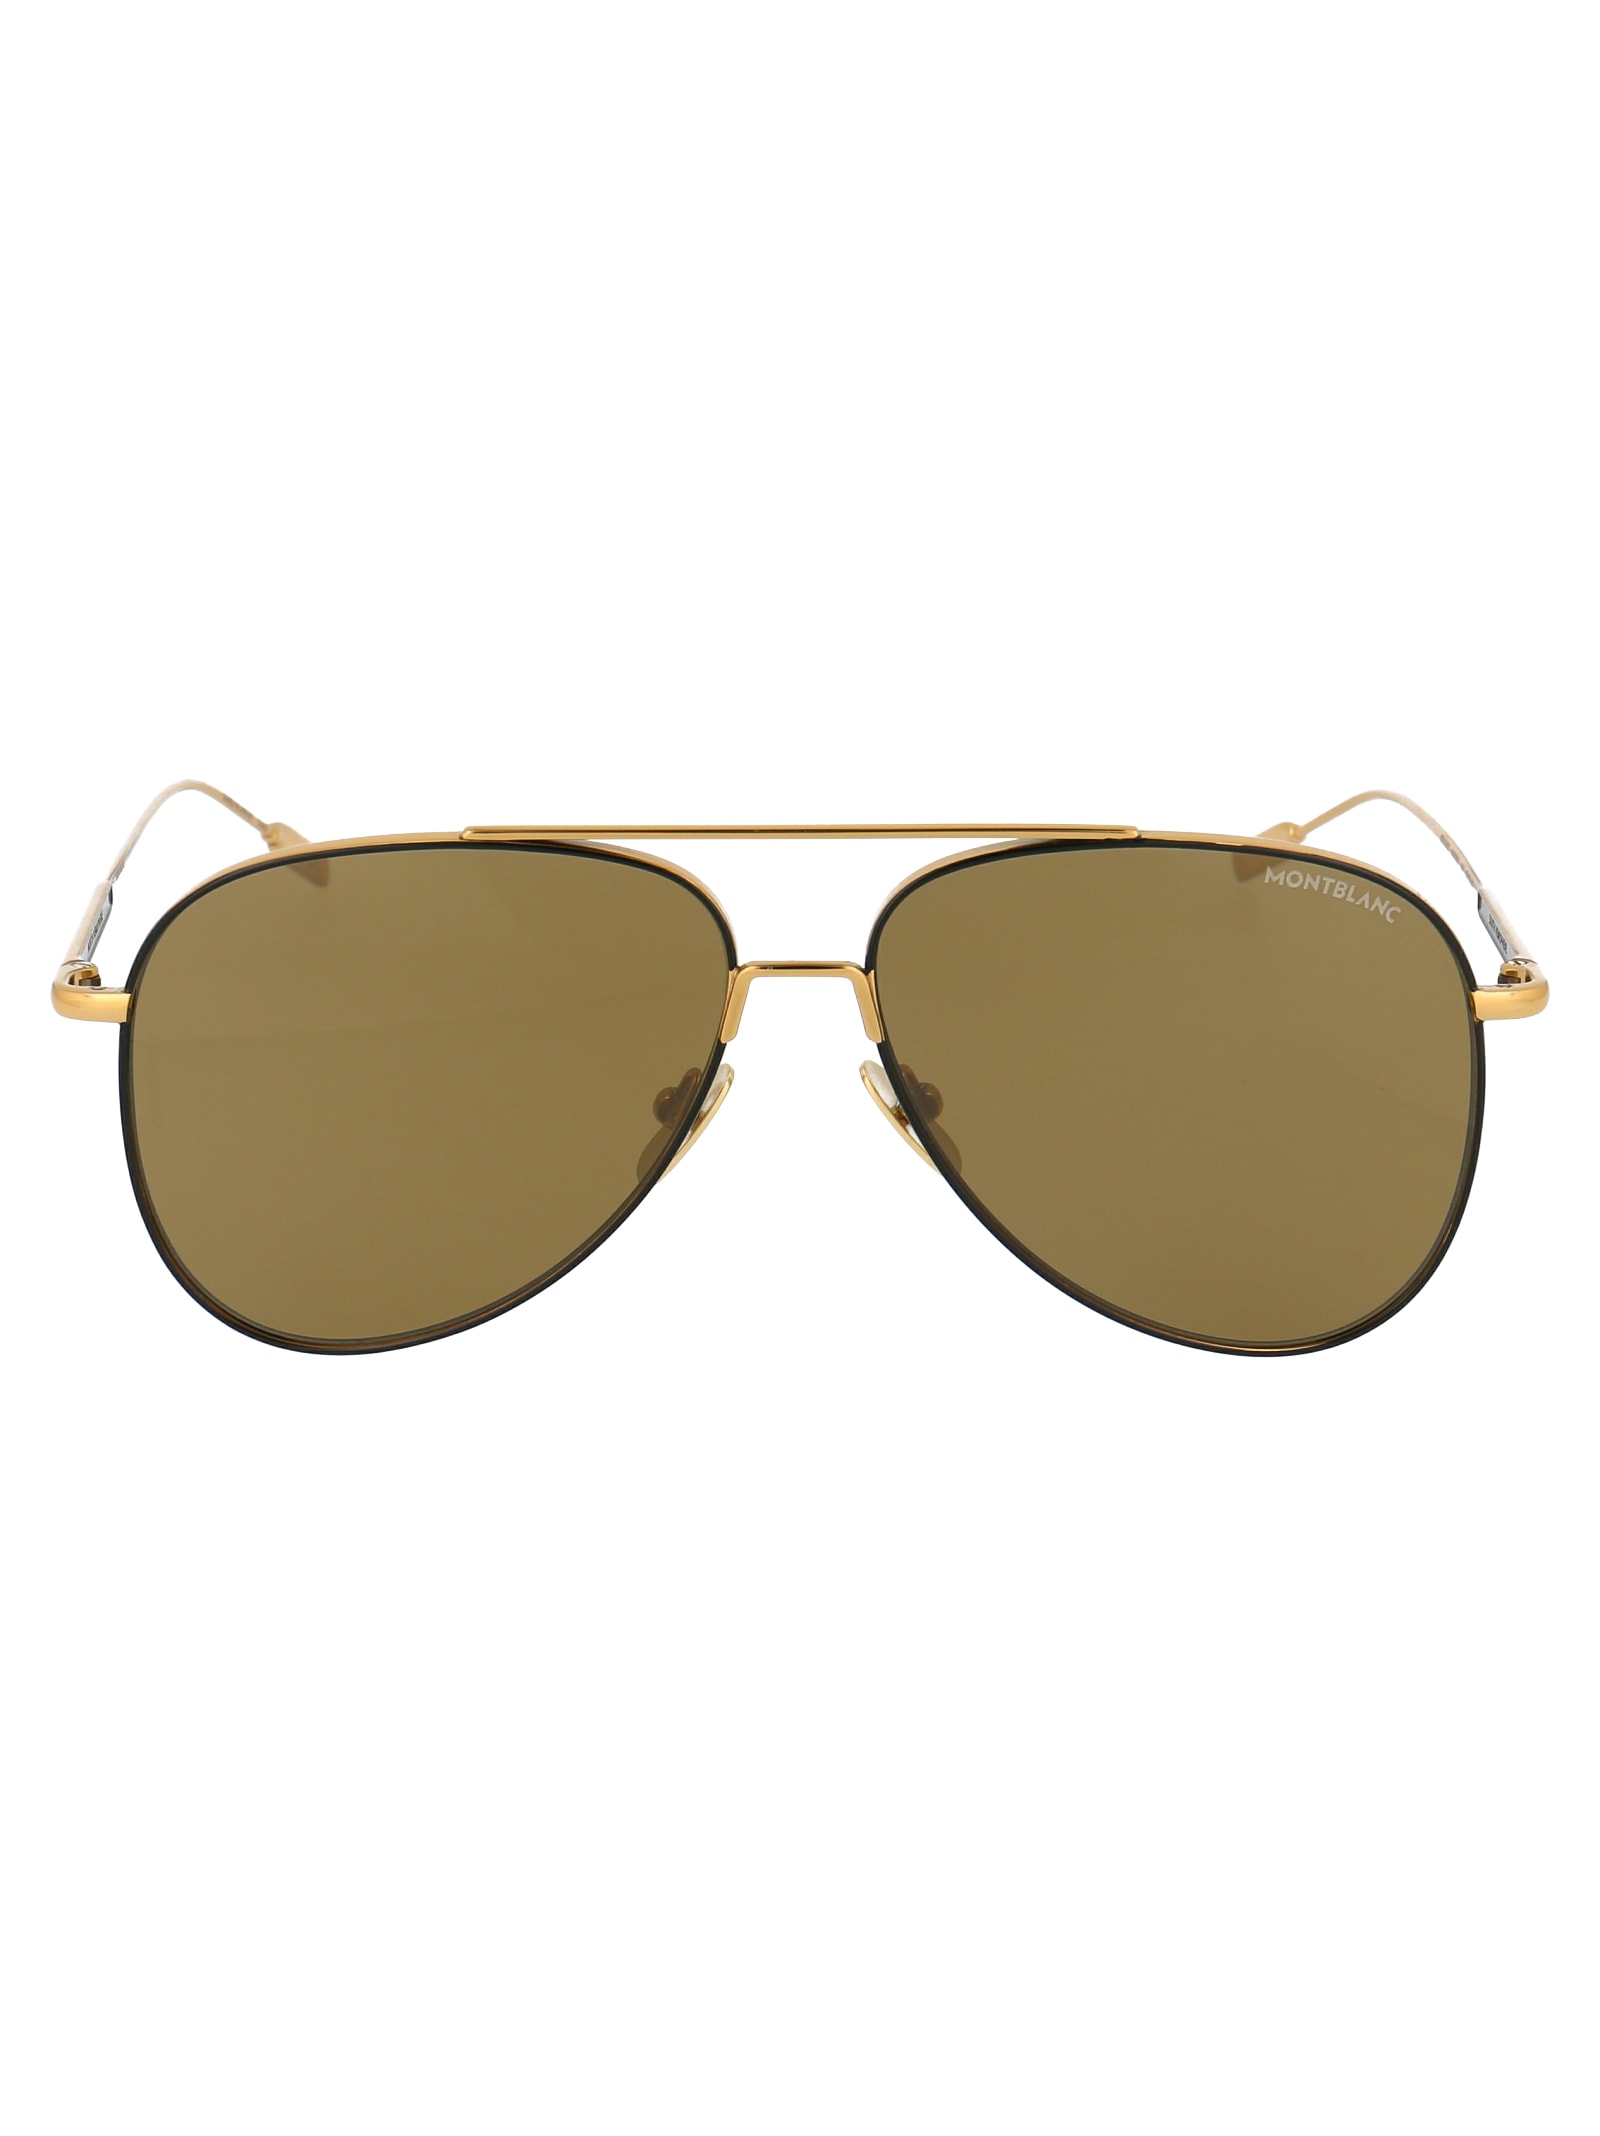 Montblanc Mb0078s Sunglasses